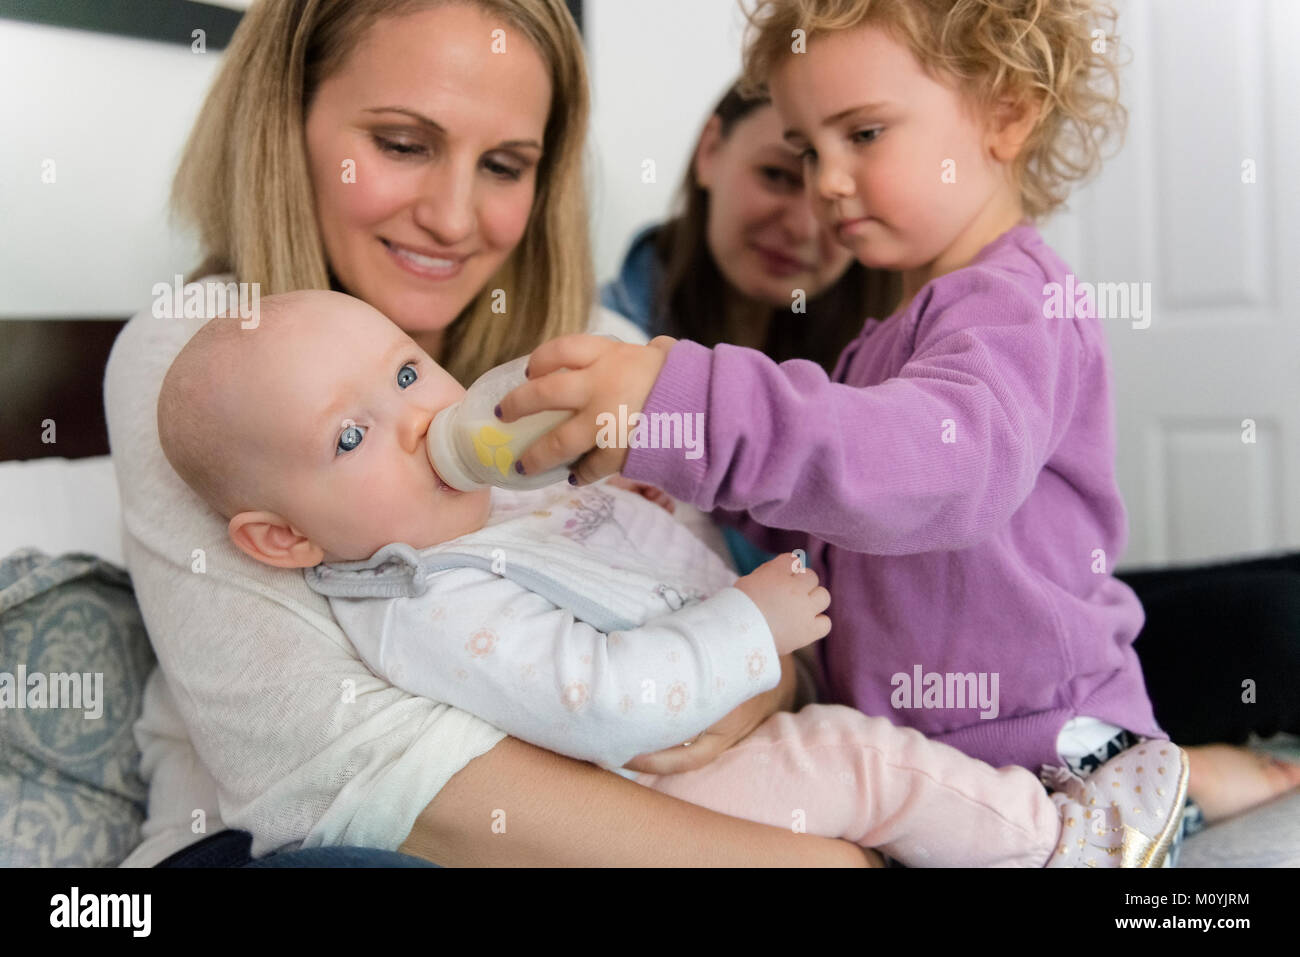 Caucasian girl feeding bottle pour baby sister Banque D'Images